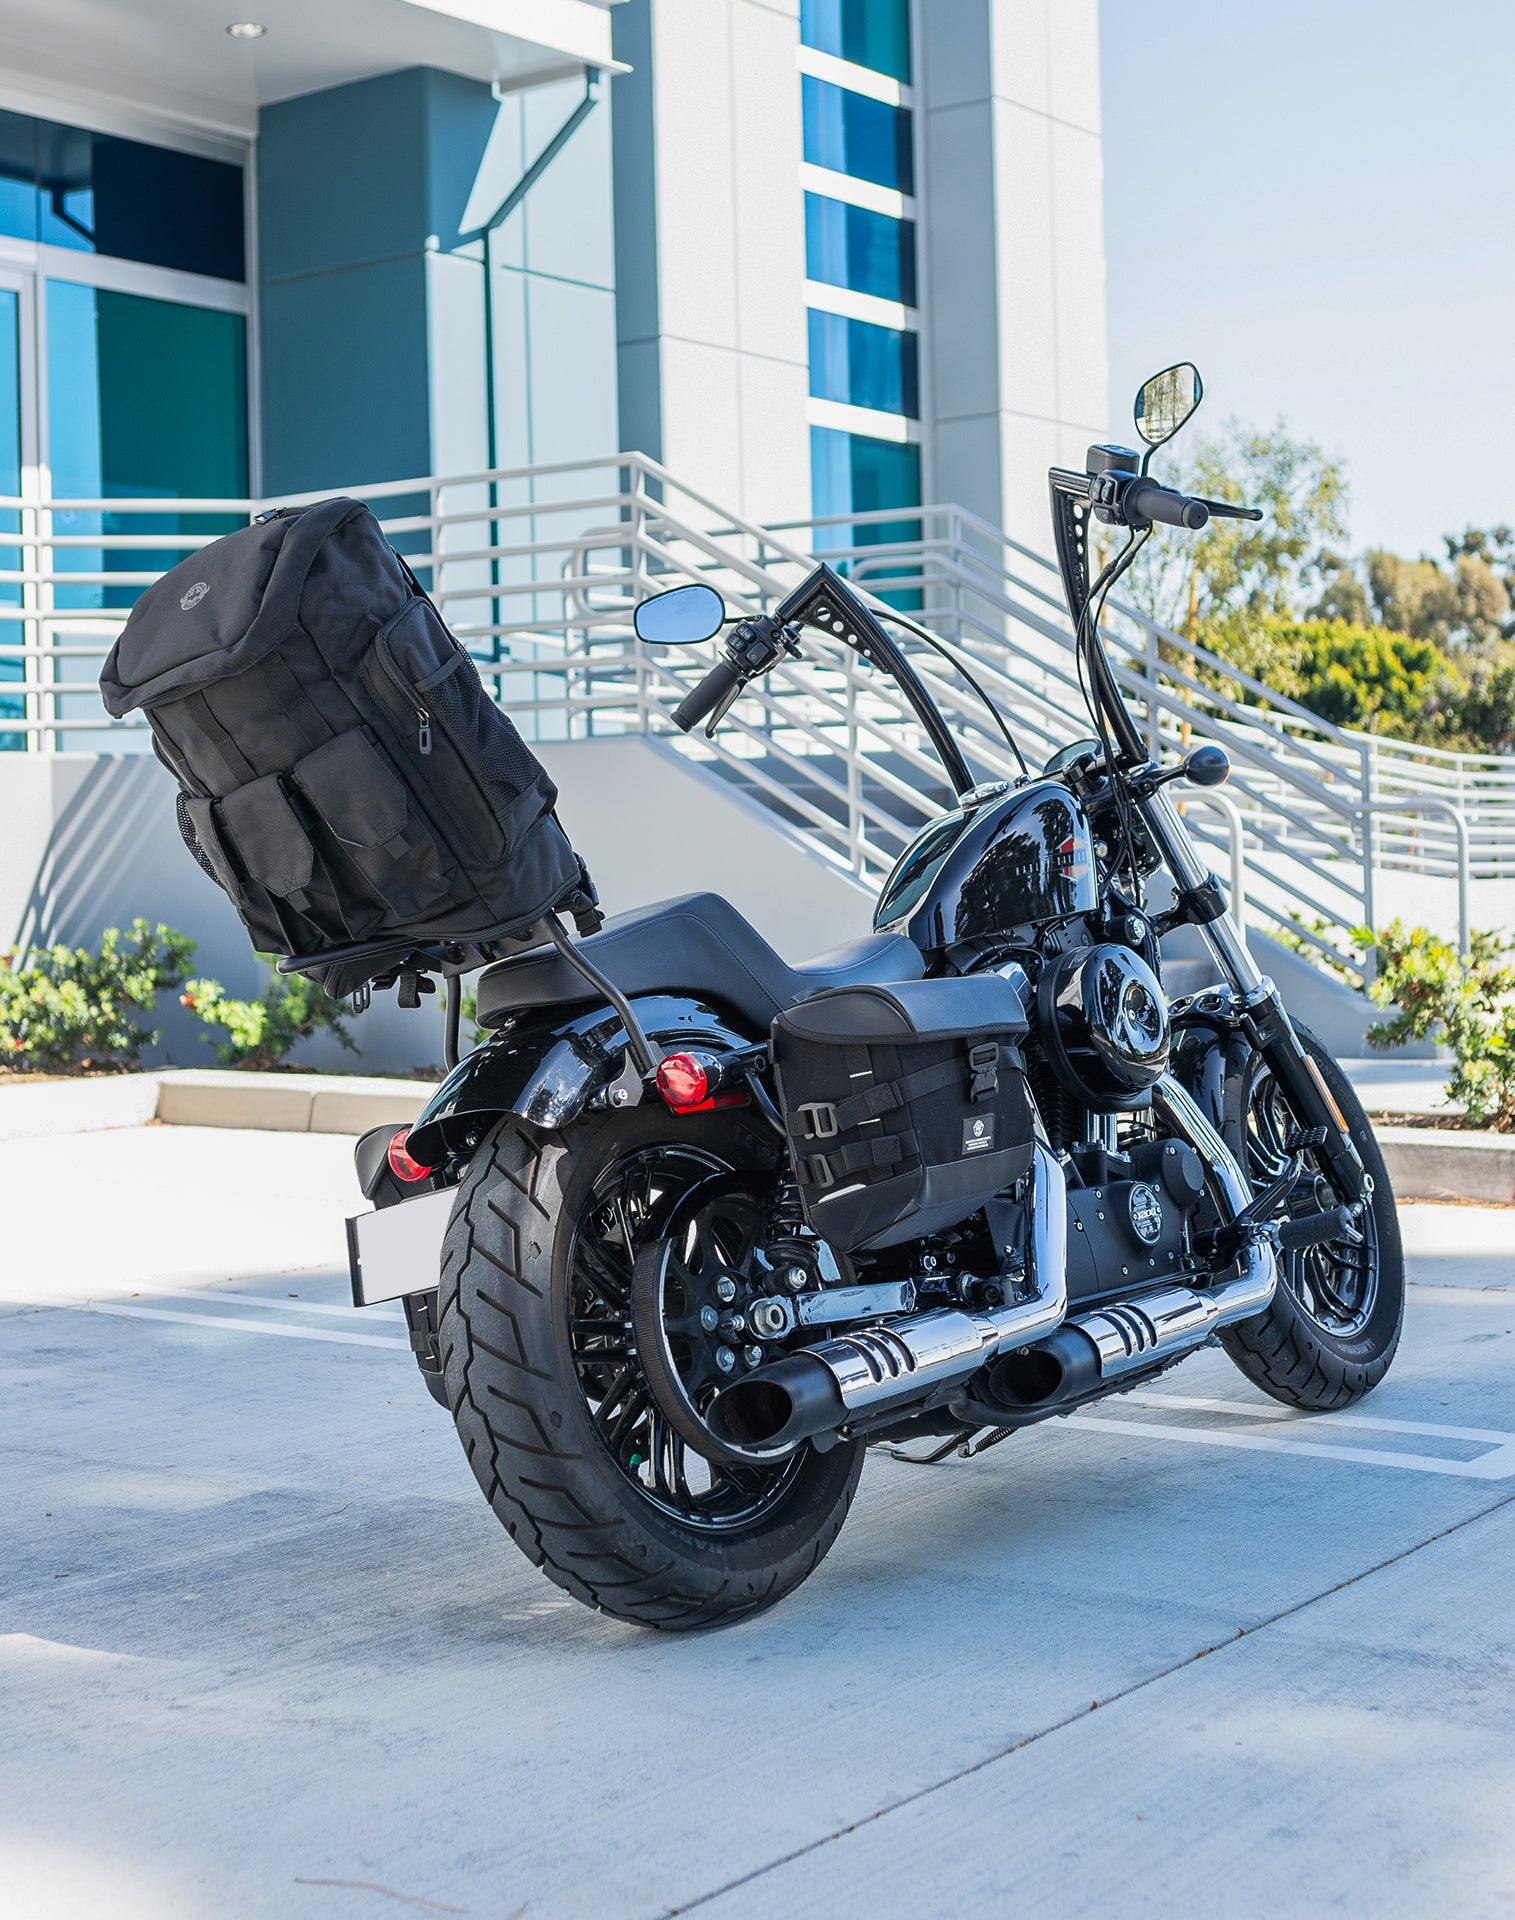 32L - Trident Large Honda Motorcycle Sissy Bar Backpack